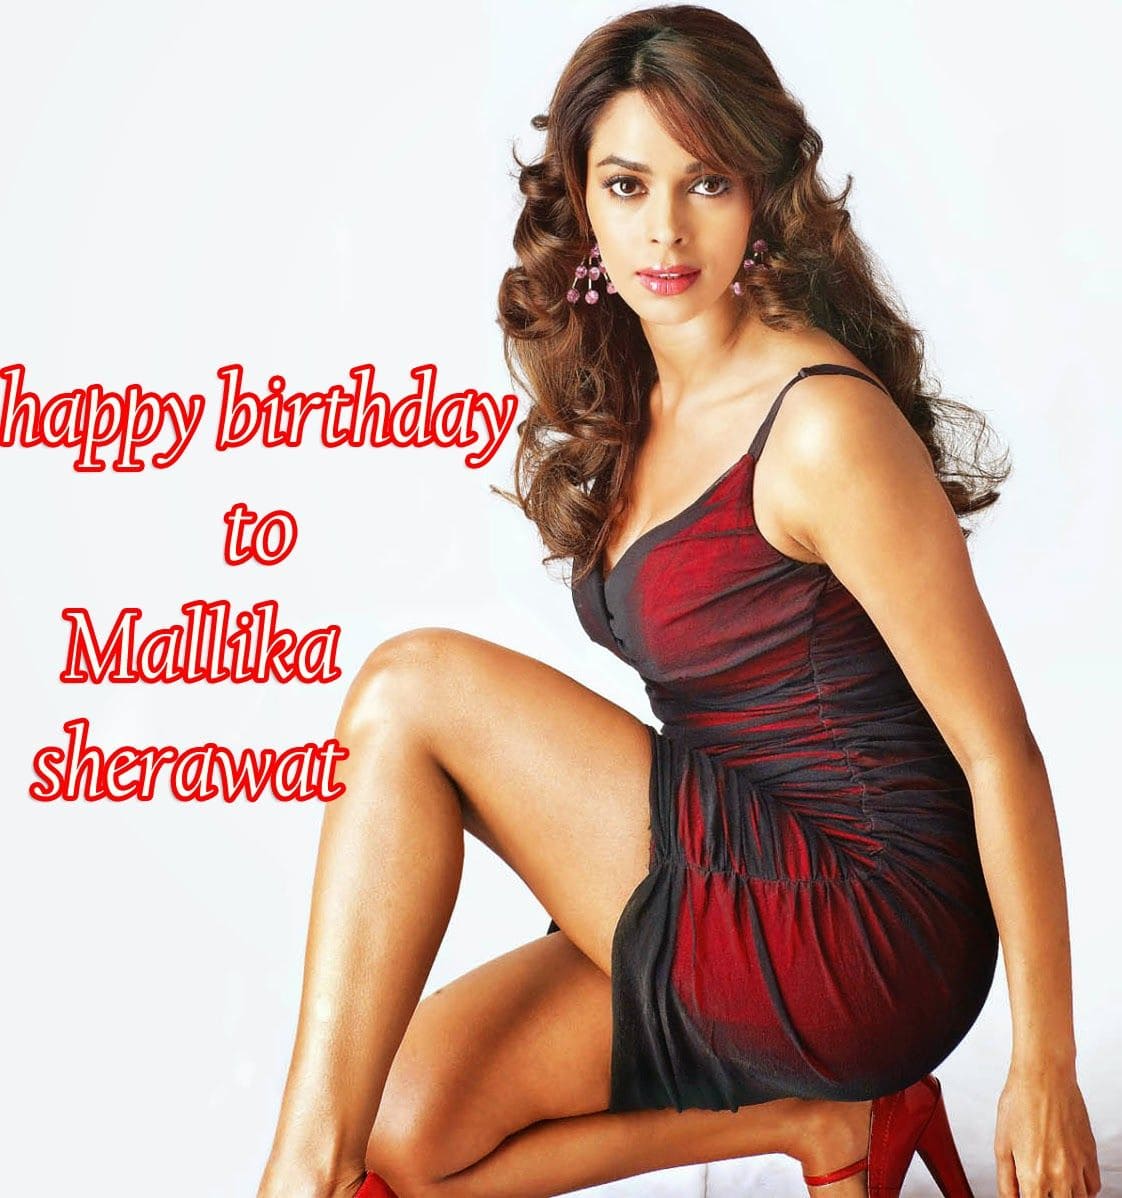 Mallika Sherawat Birthday: Wishes from Pradip Madgaonkar 
पहली फिल्म में दिए 21 किसिंग सीन, पति ने दिया तलाक, फिर पिता ने छोड़ा साथ…एक्ट्रेस के अनसुने किस्से

#mallikasherawat #mallikasherawatbirthday  #bollywoodactress #actress #model #pradip #pradipmadgaonkar #filmactress